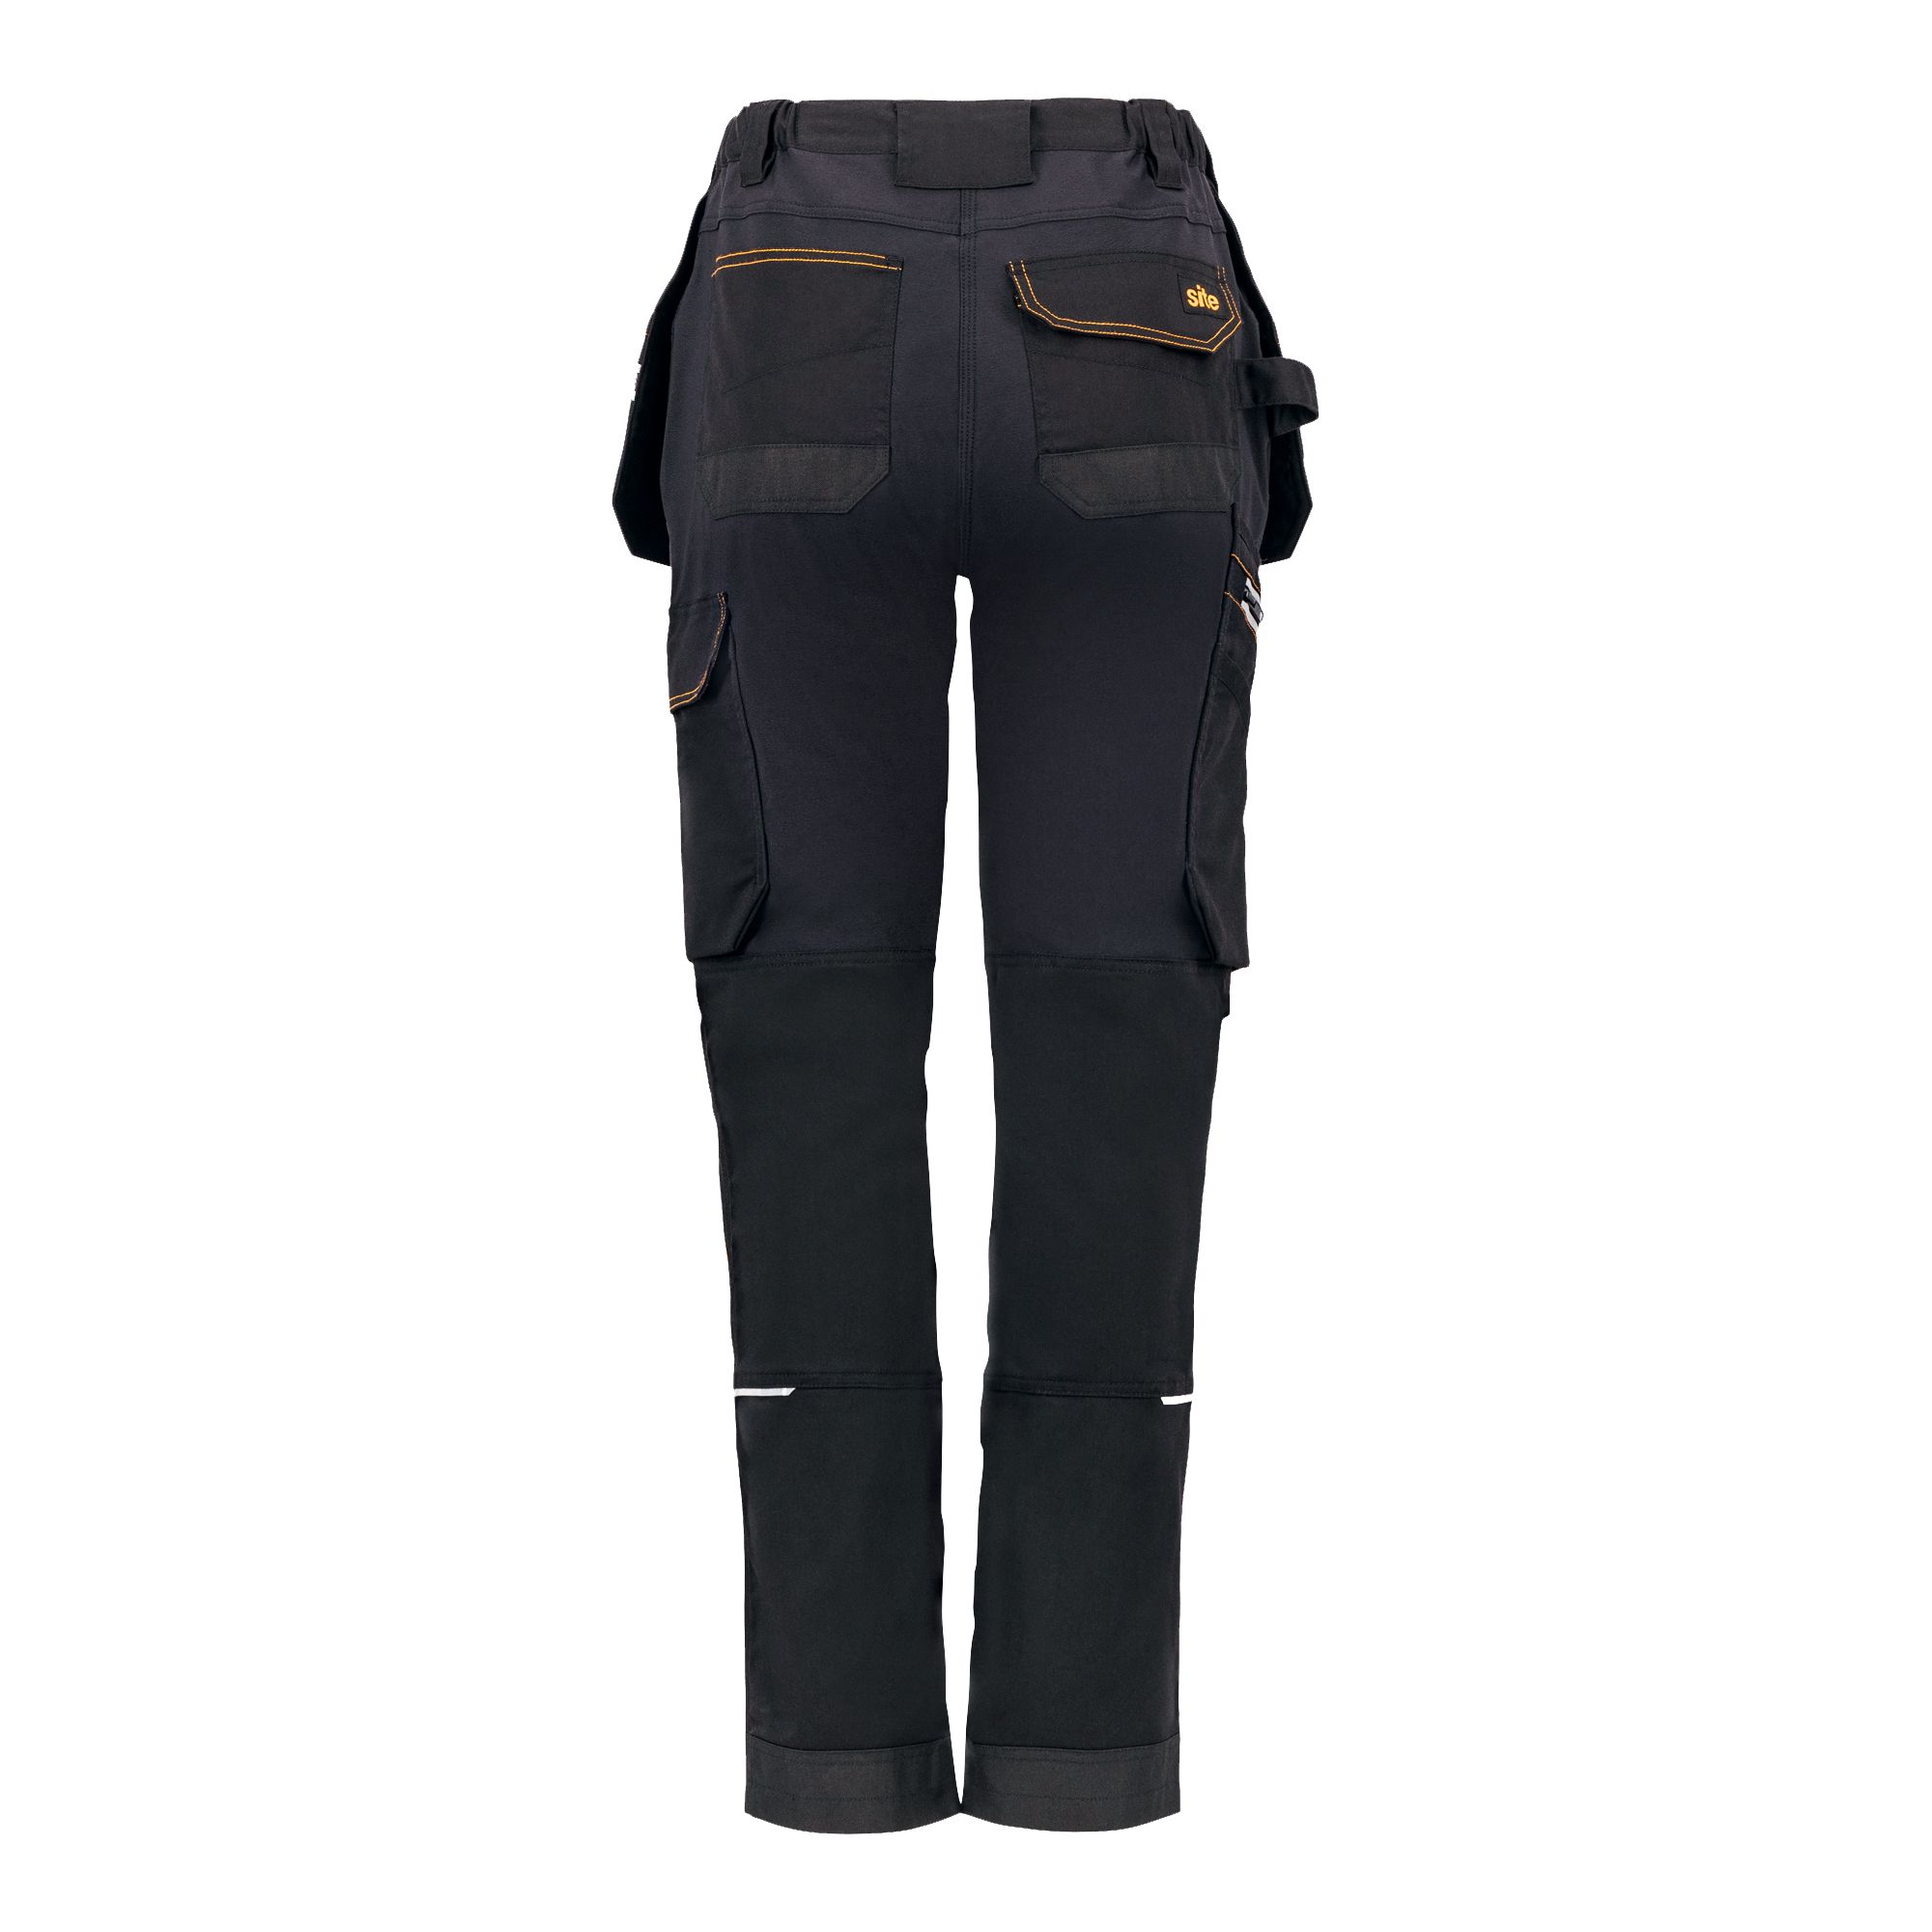 Site Kilani Black/Grey Ladies trousers, Size 12 L31"